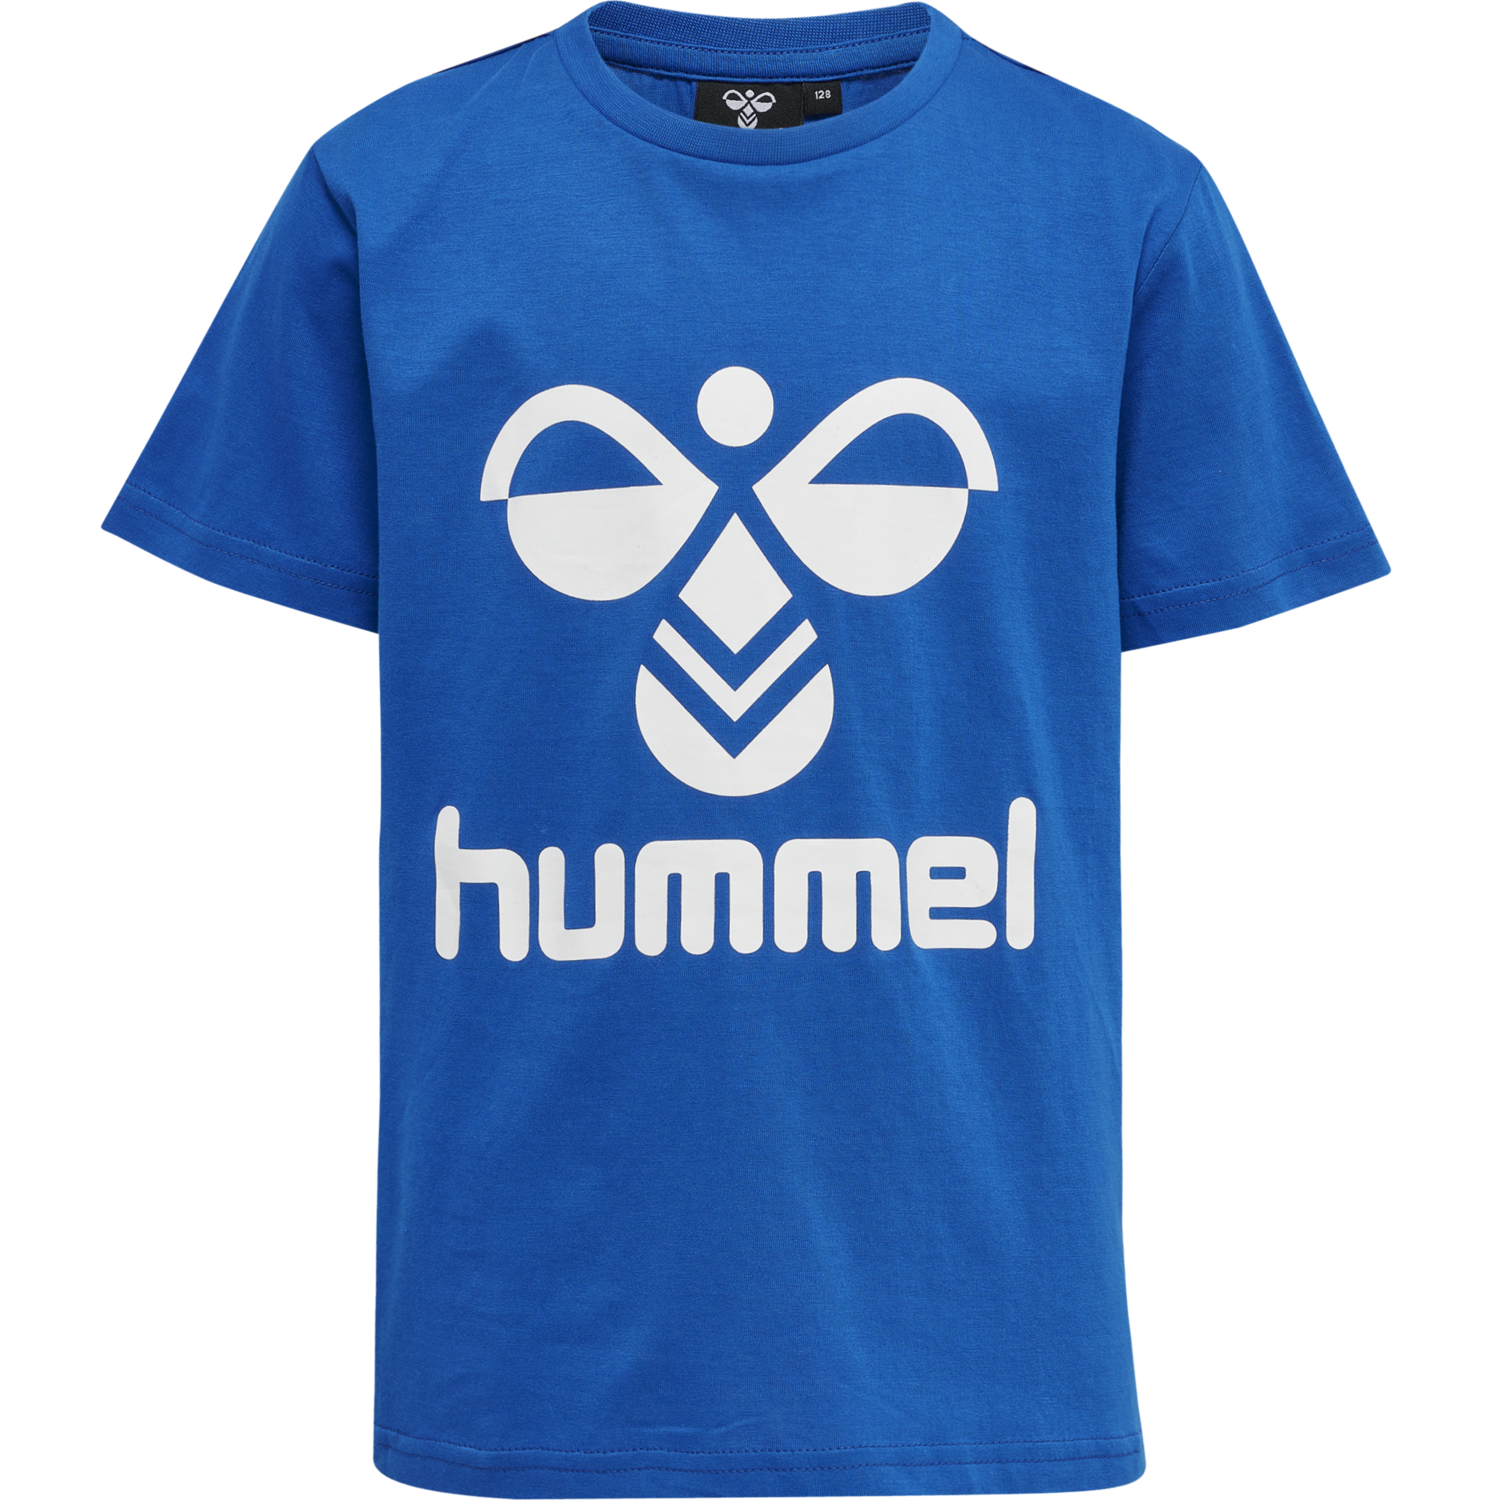 hummel Hmltres T-Shirt S/S Camisetas Unisex niños 